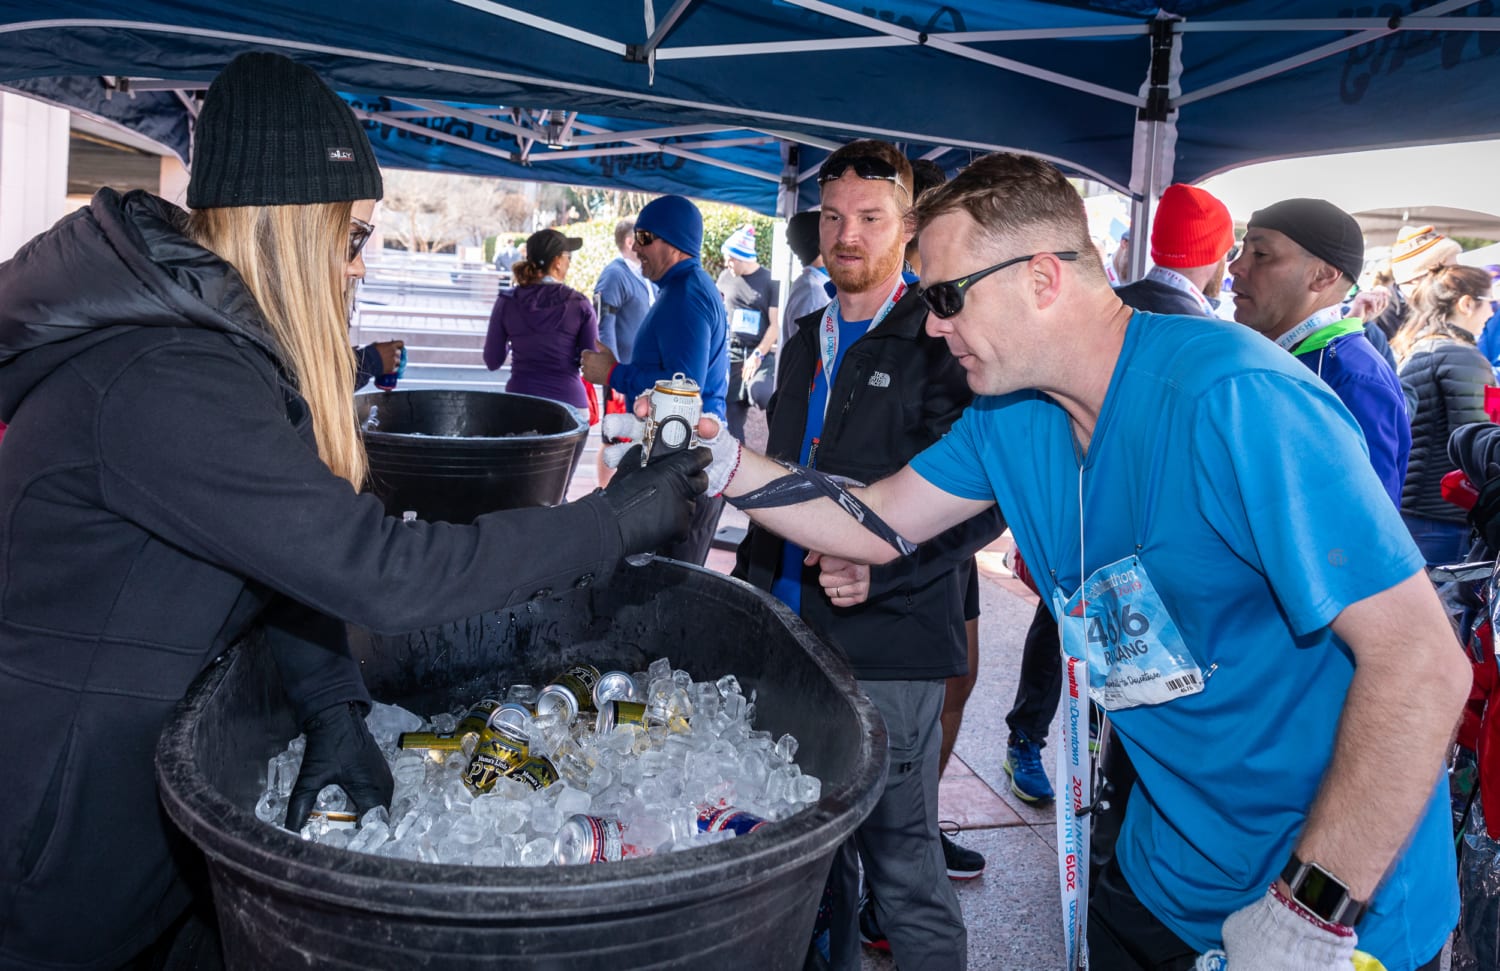 In 2018, runner gets a beer from Oskar Blues, the Official Beer Sponsor of the 3M Half Marathon.